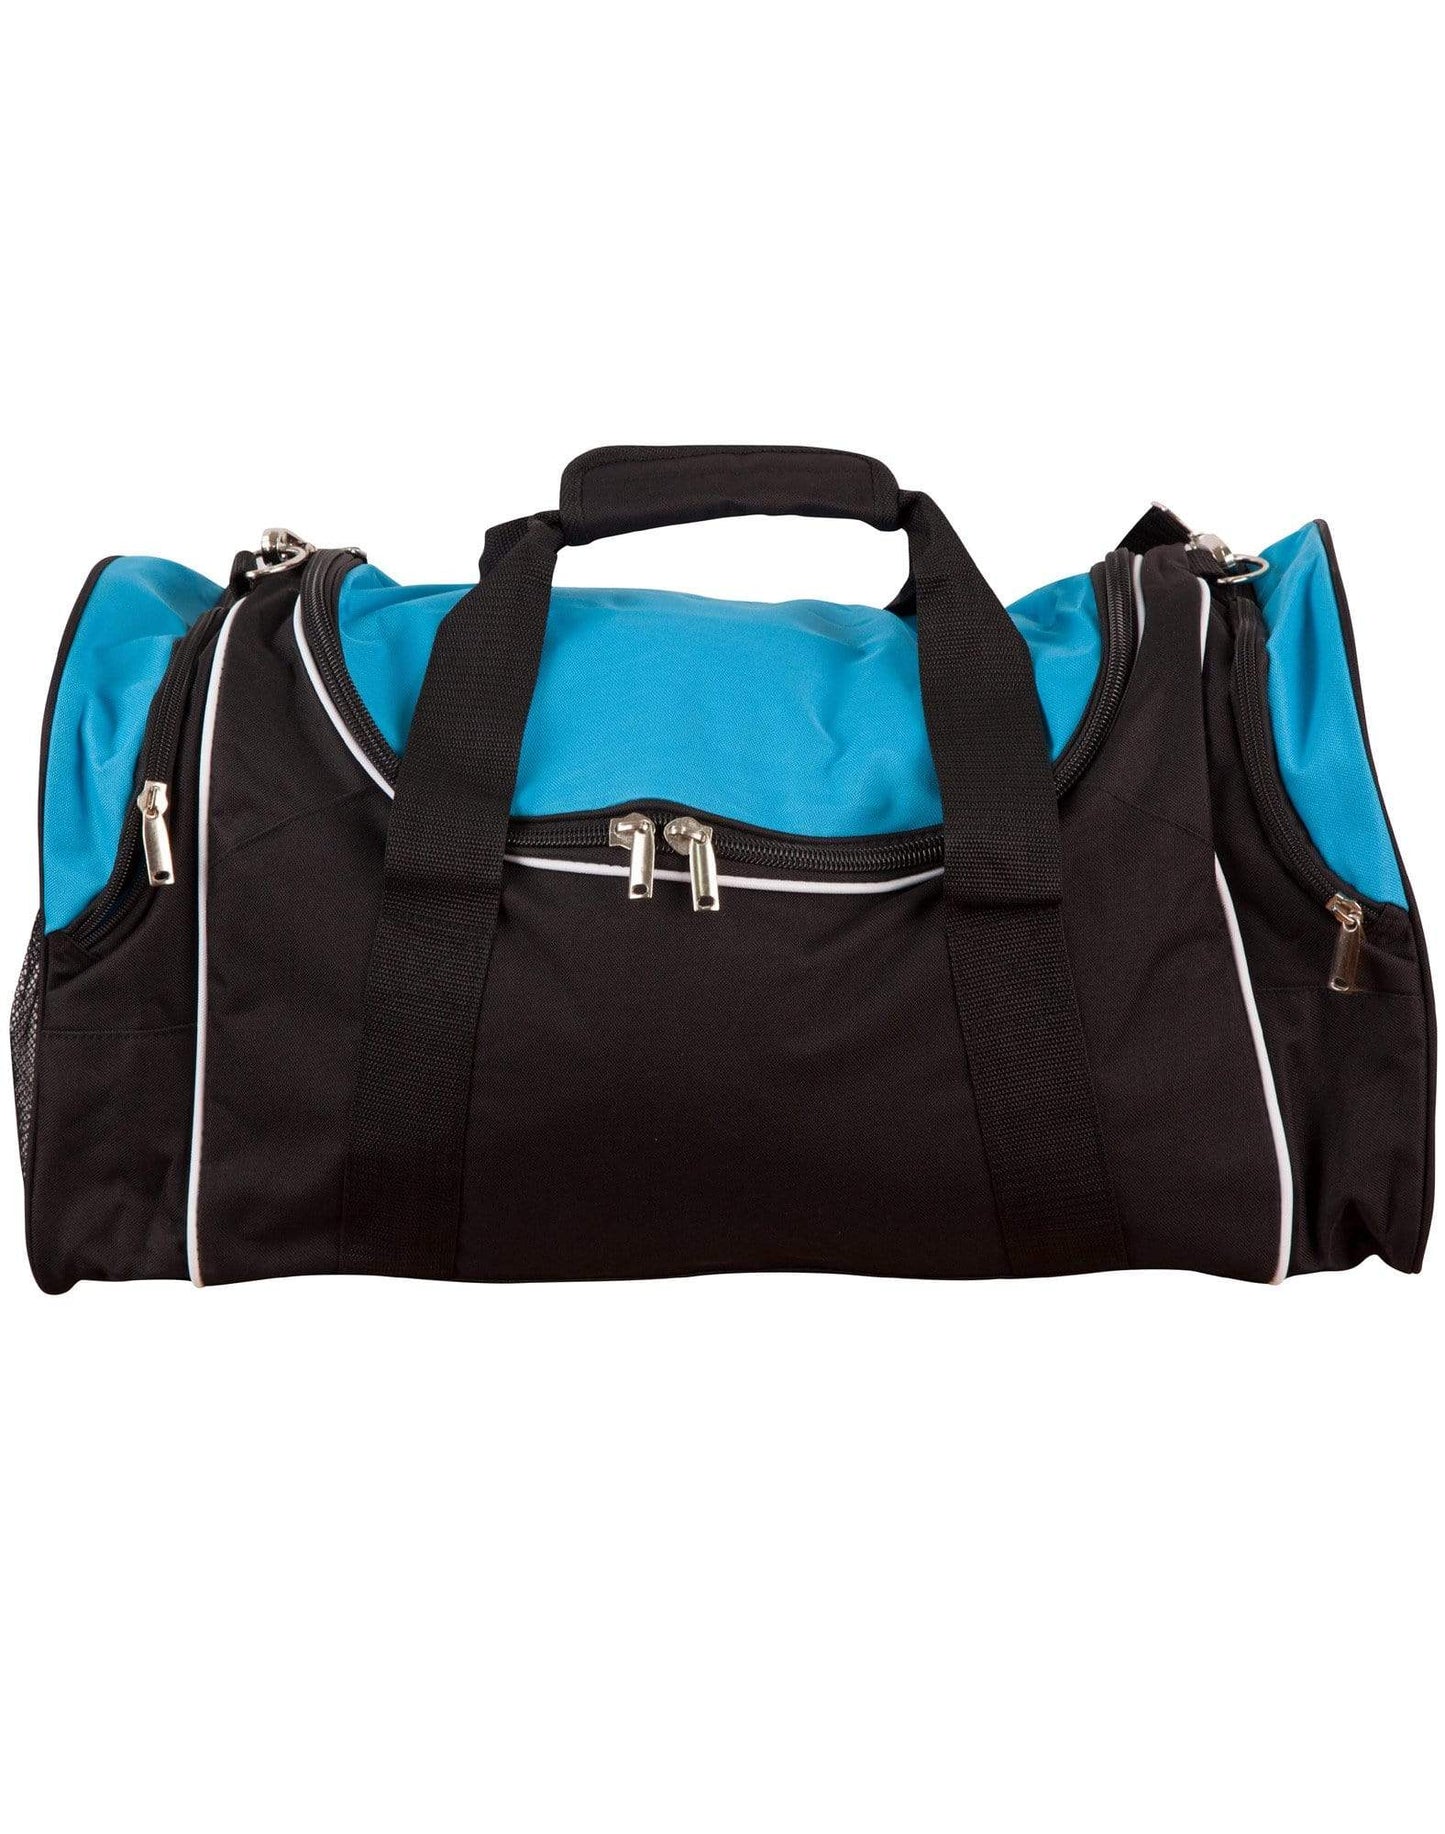 Winner Sports/ Travel Bag B2020 Active Wear Winning Spirit Black/White/Aqua Blue "(w)65cm x (h)32cm x (d)27cm, 56.2 Litres Capacity" 